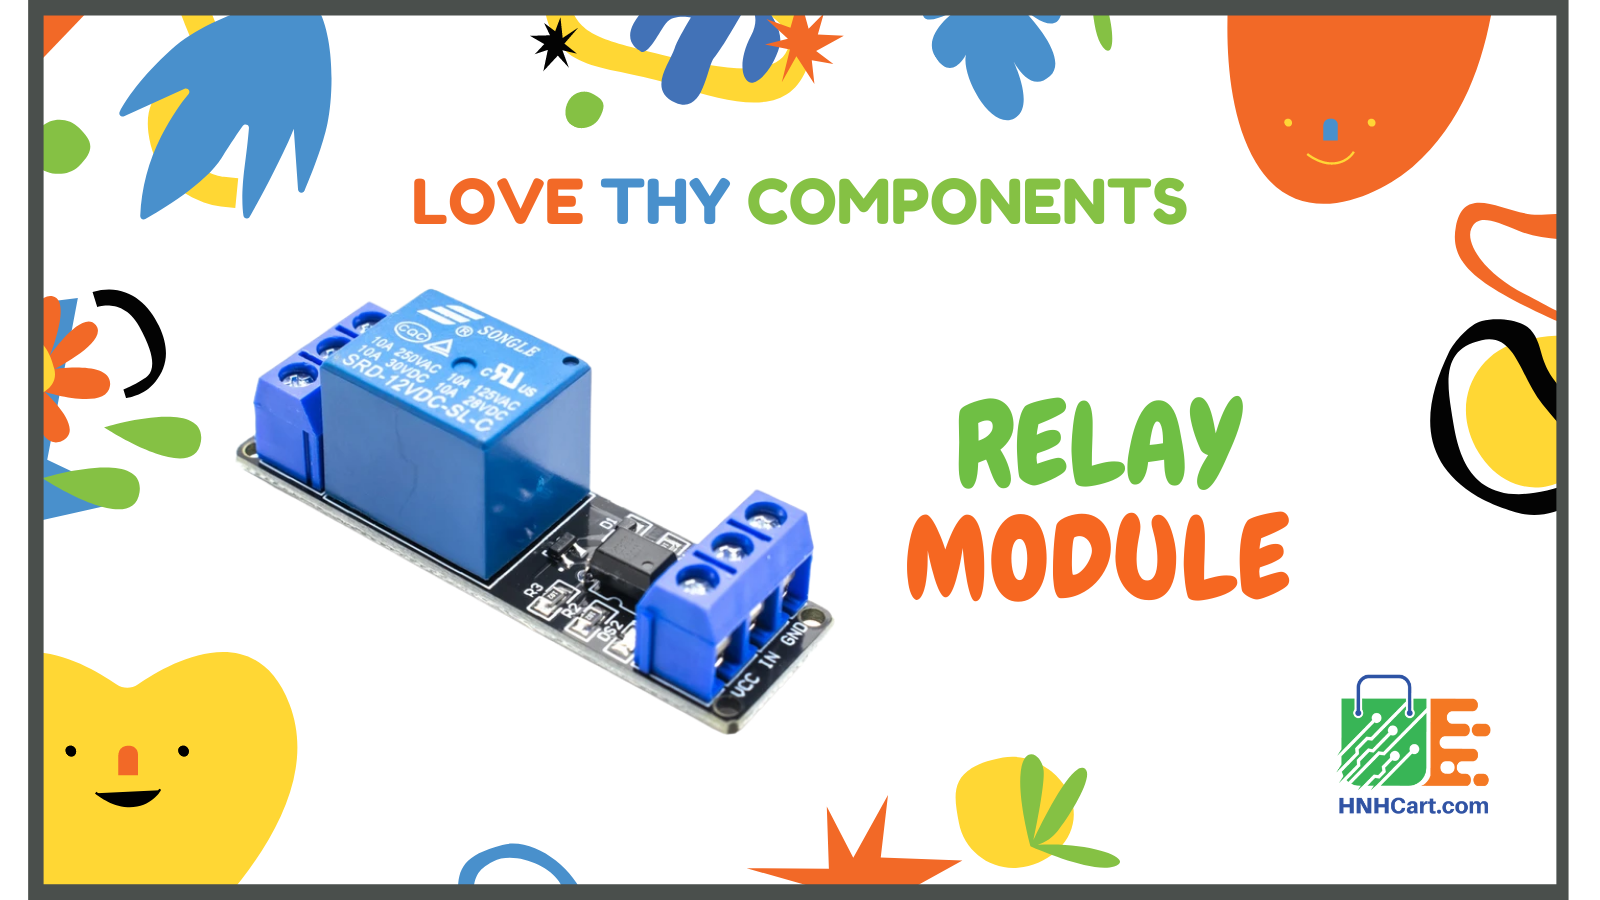 WIF-RELAY01-5V, Module Relais Arduino, AVR, PIC, Raspberry Pi, TTL Relay  Control Card